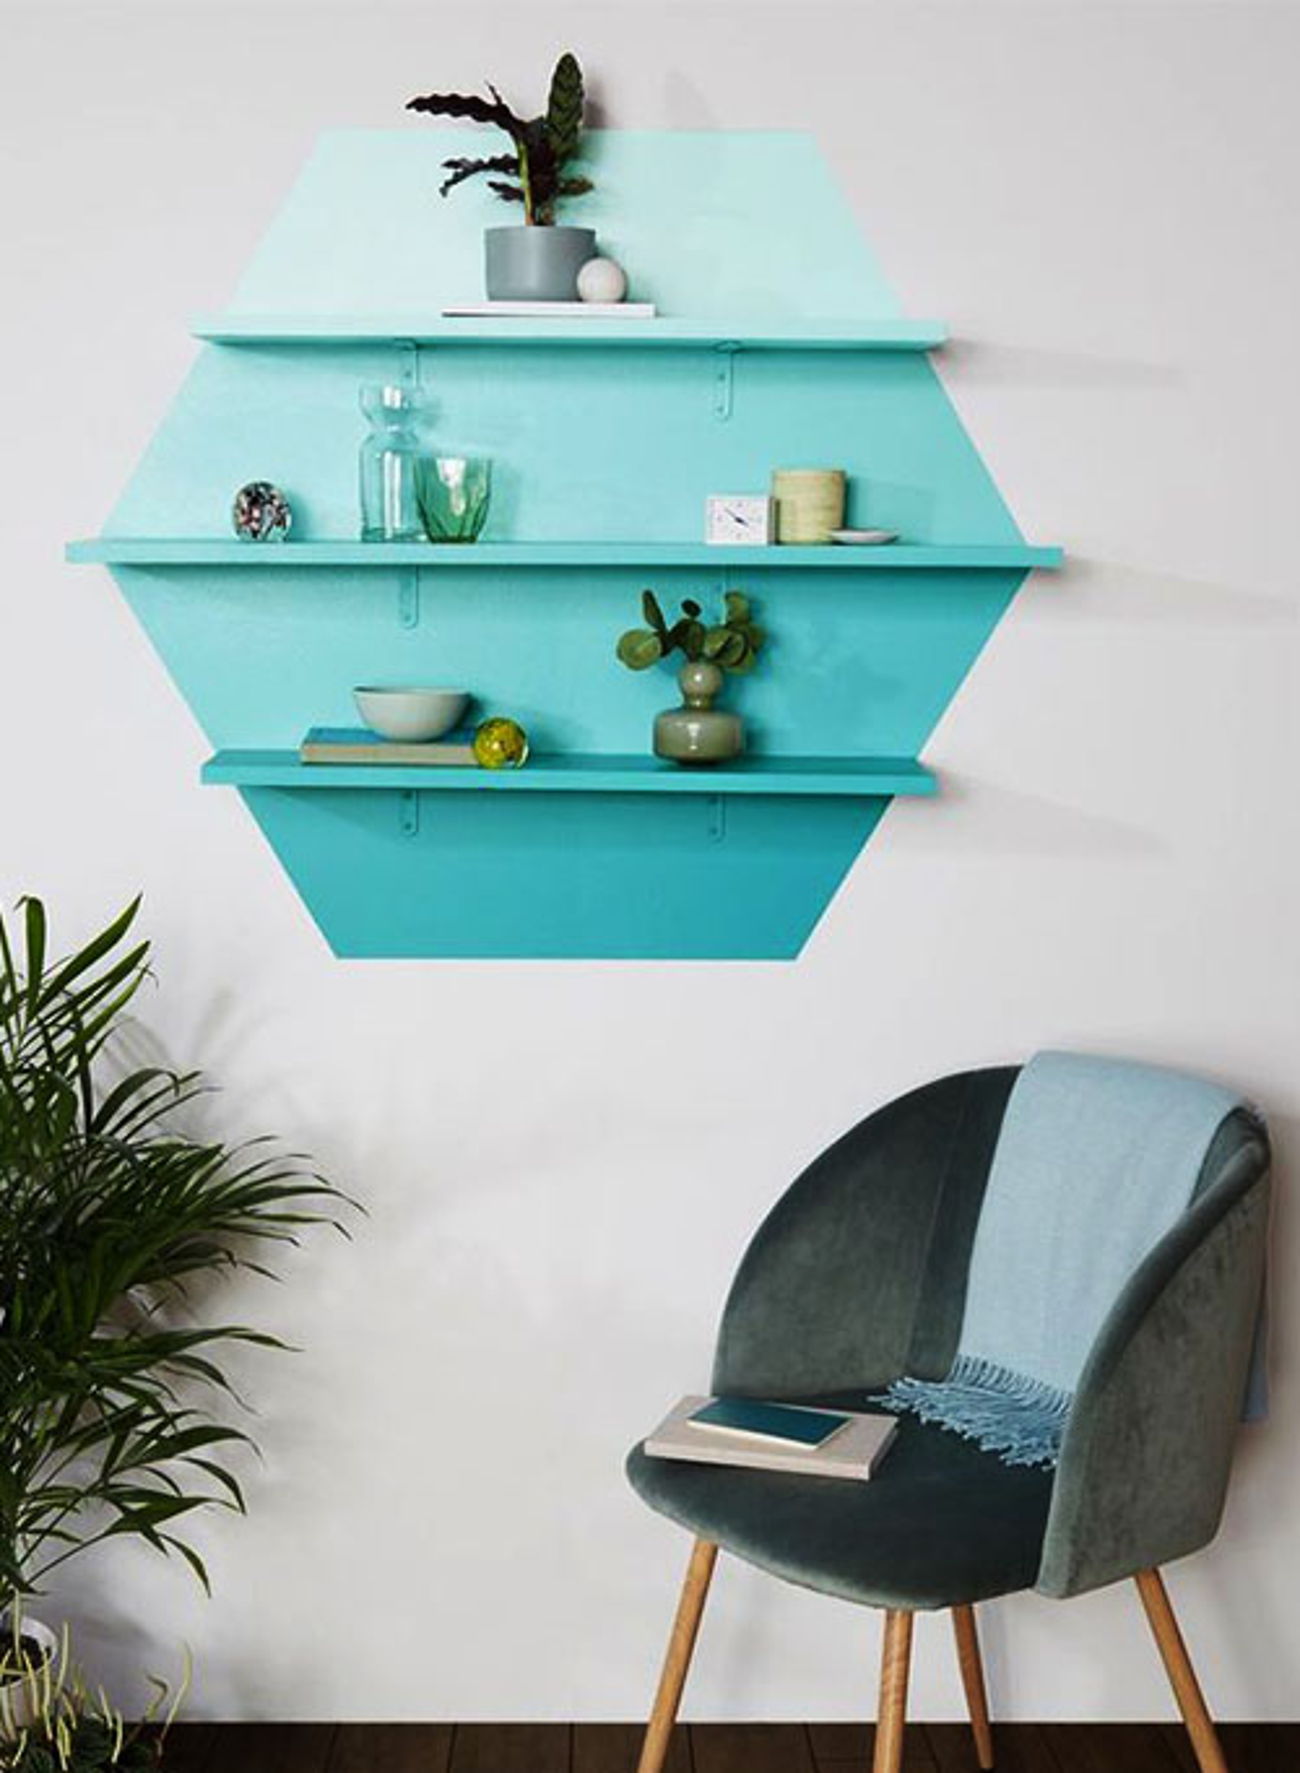 Decorative ombre-designed shelves